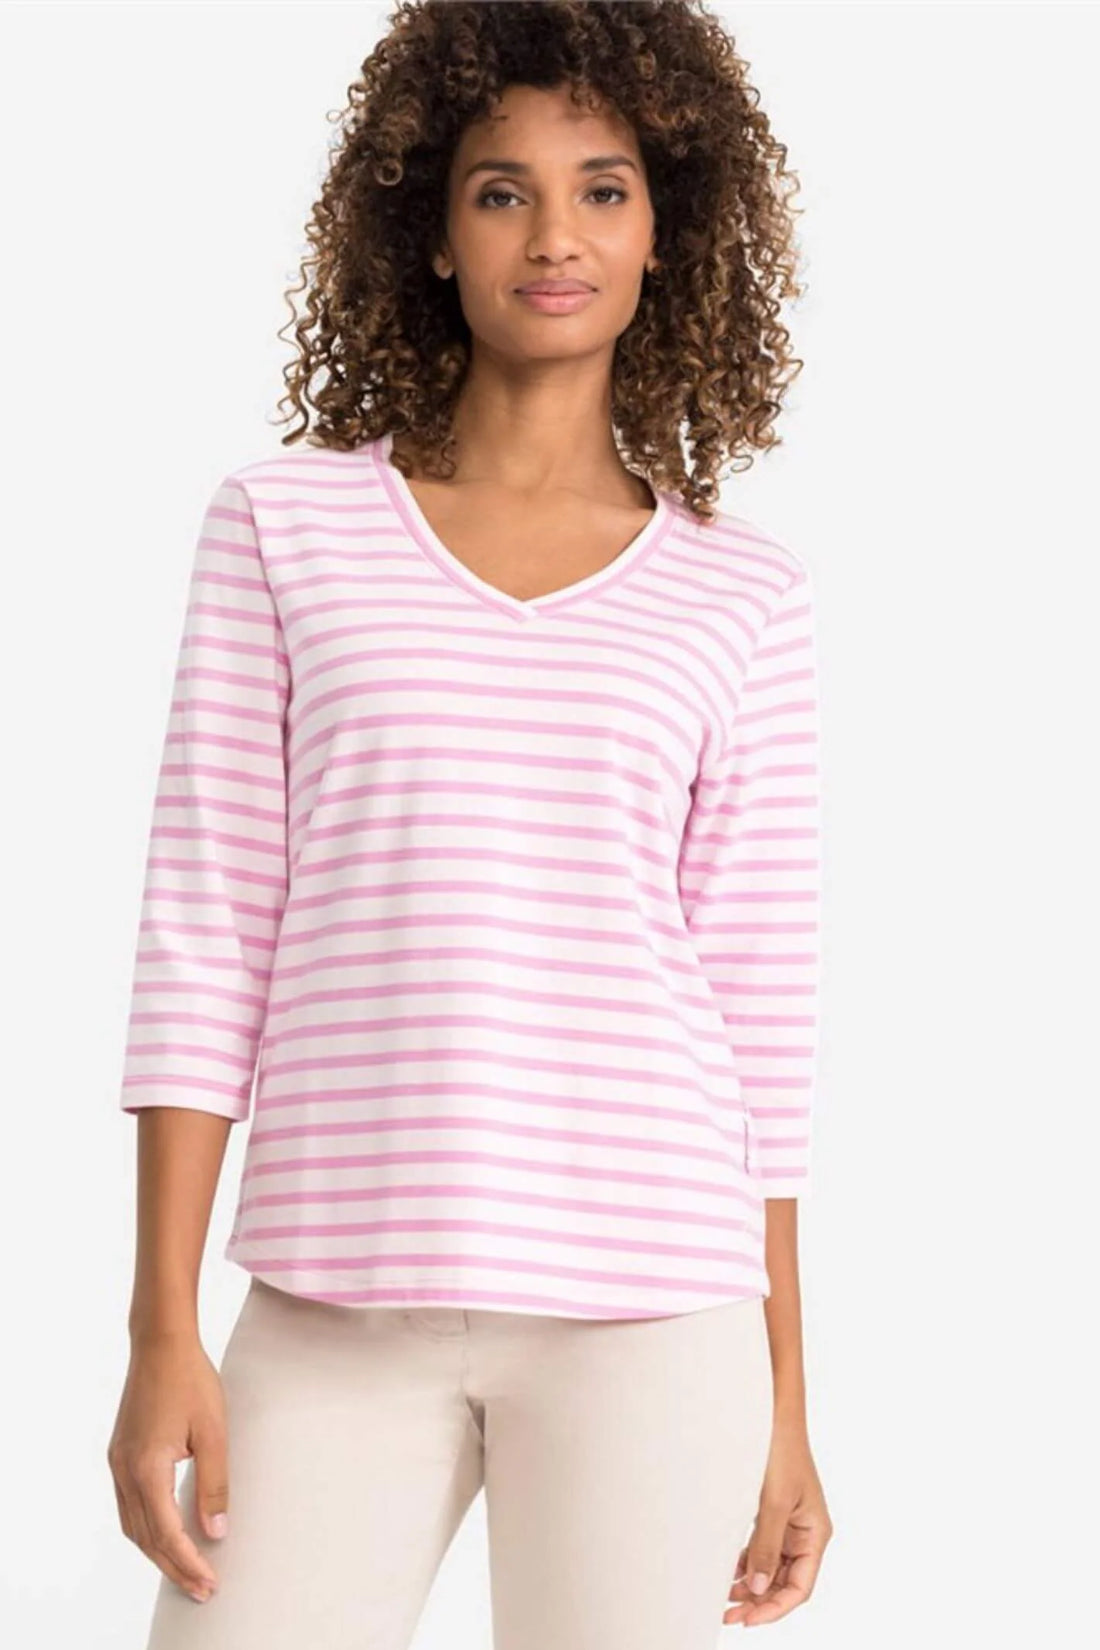 Olsen - Pink Stripe 3/4 Sleeve T-Shirt